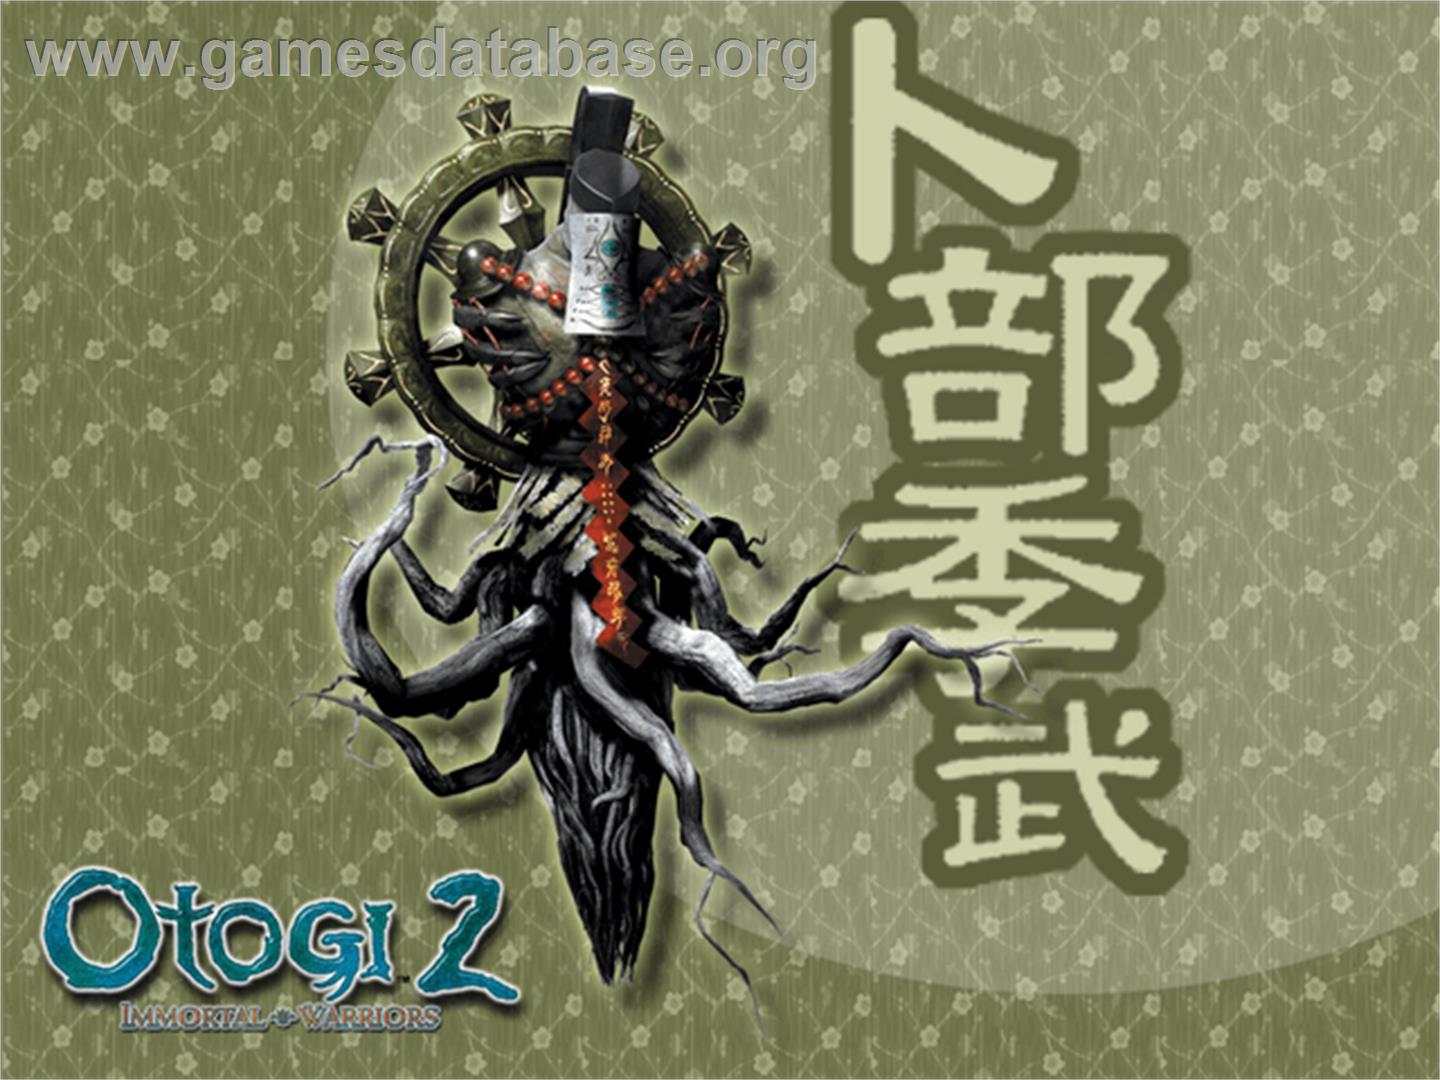 Otogi 2: Immortal Warriors - Microsoft Xbox - Artwork - Title Screen